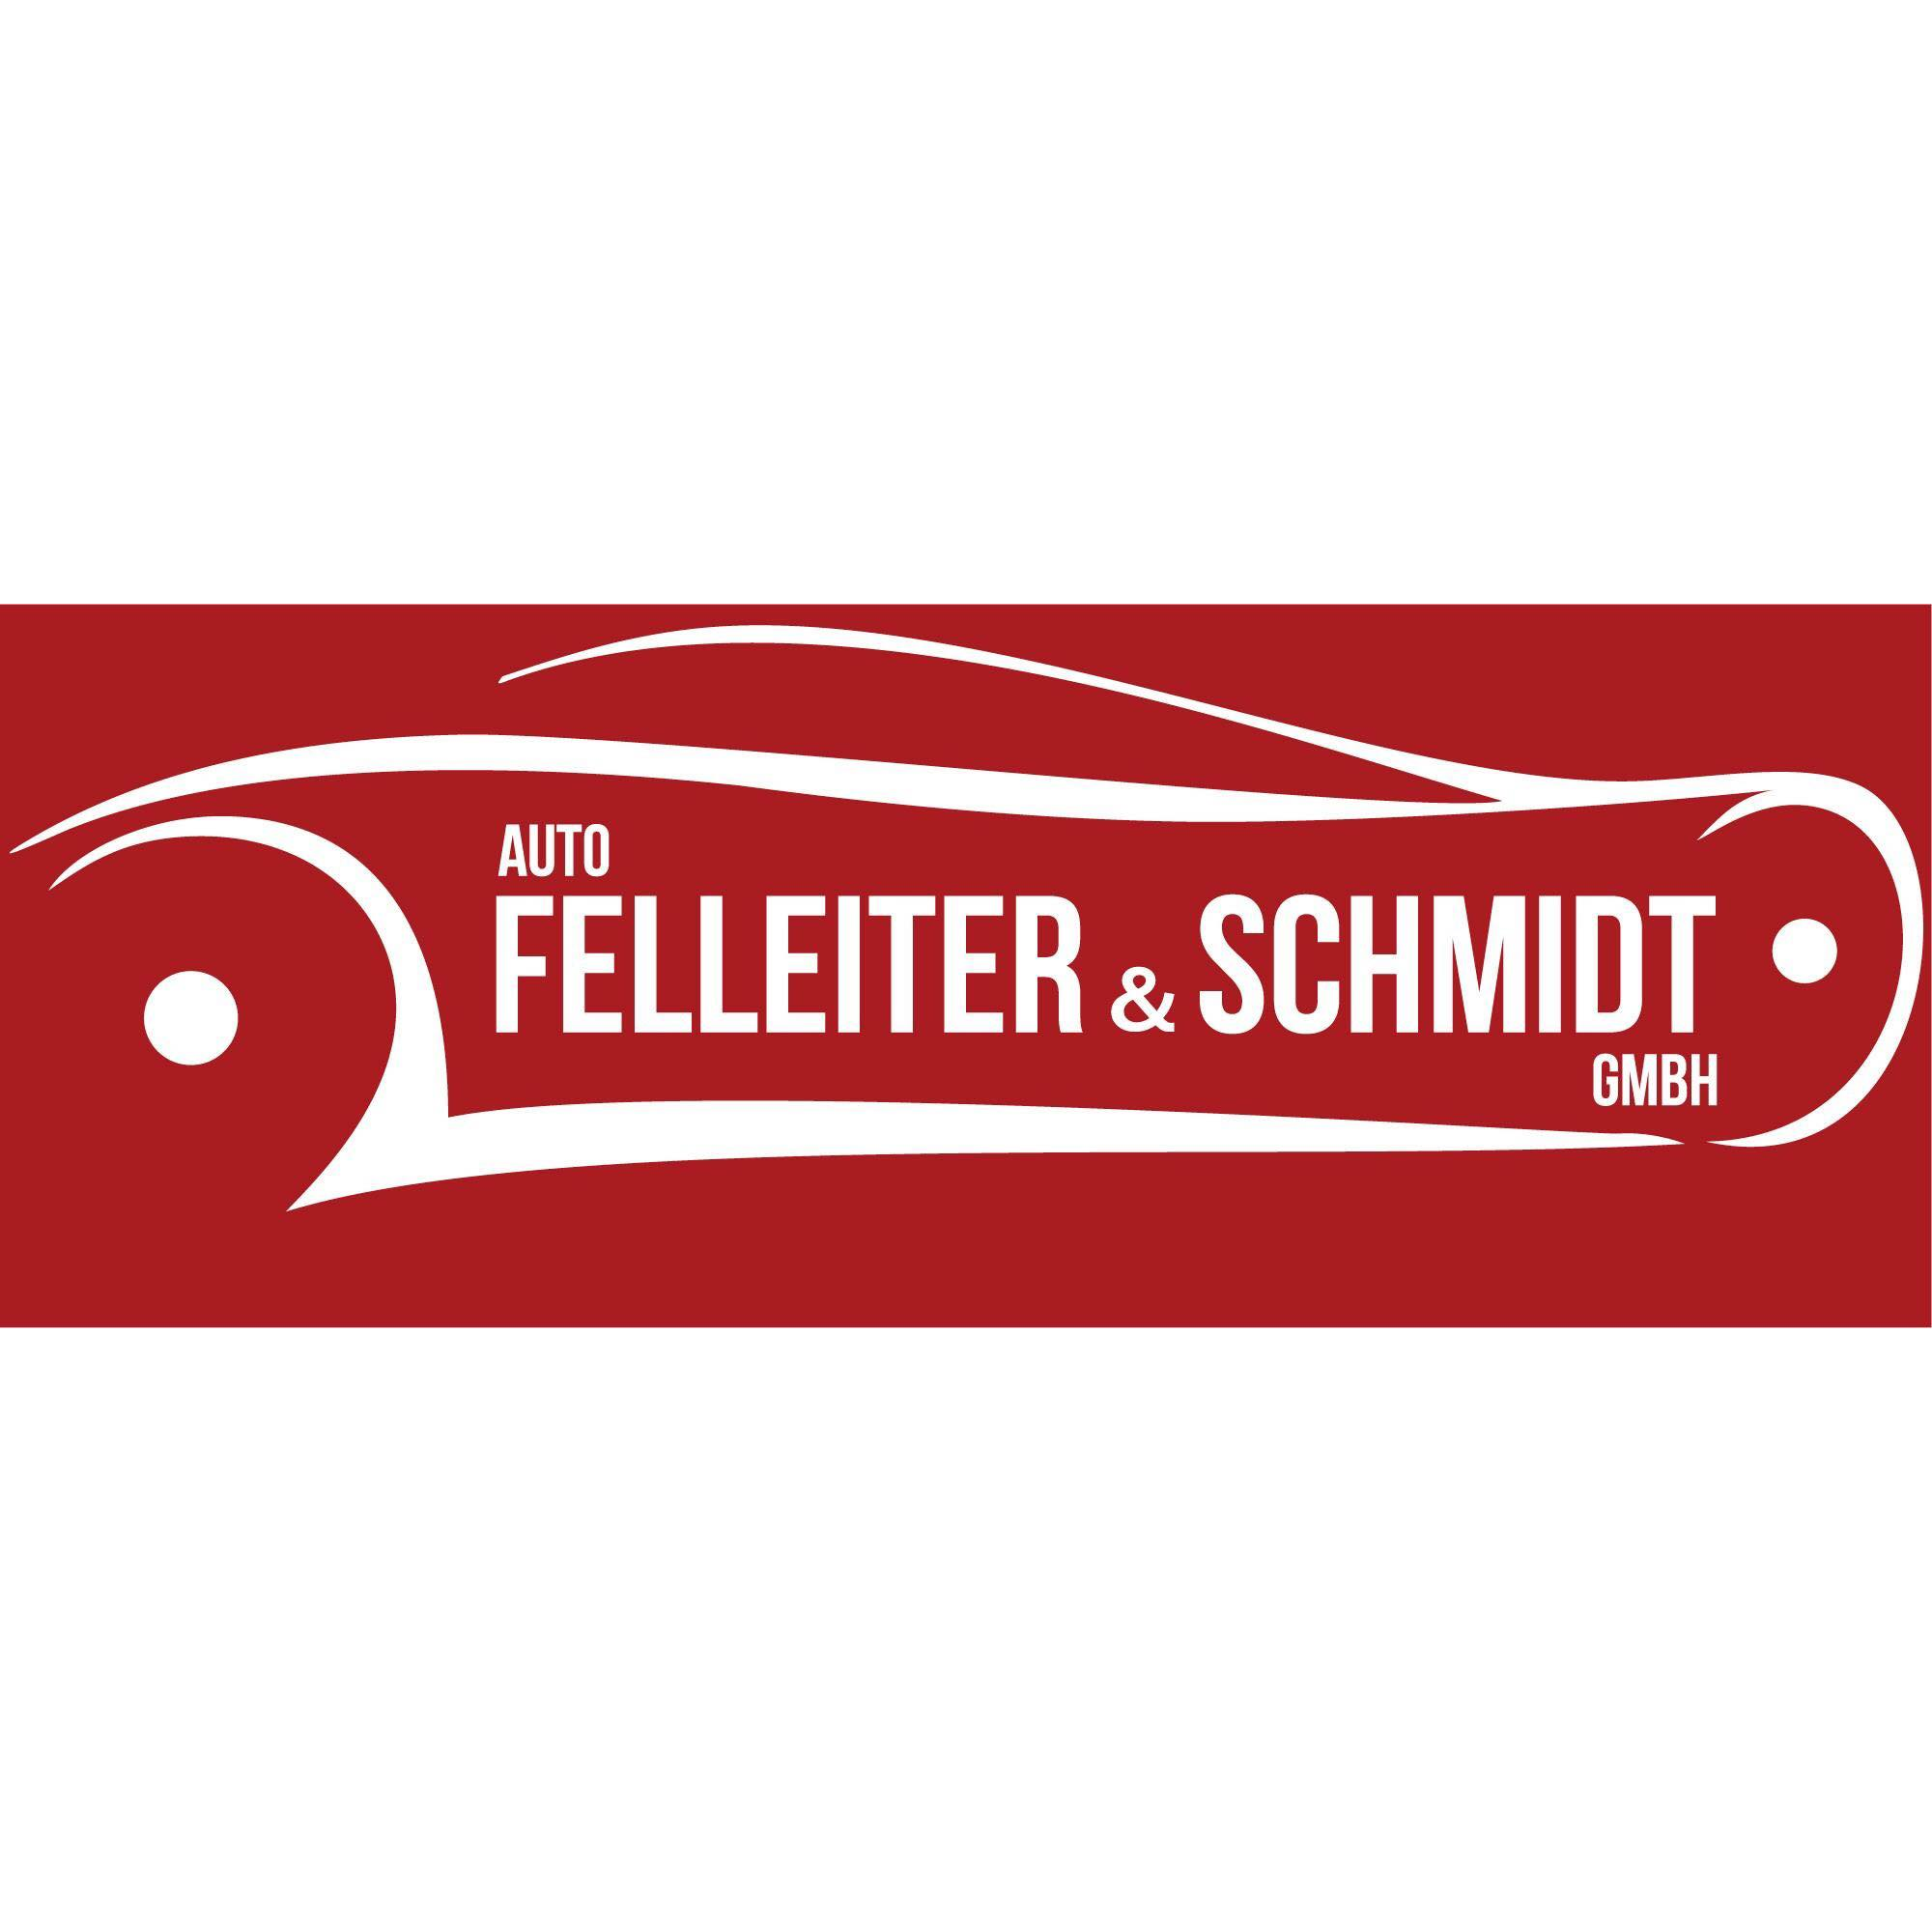 Auto Felleiter & Schmidt GmbH in Treuchtlingen - Logo